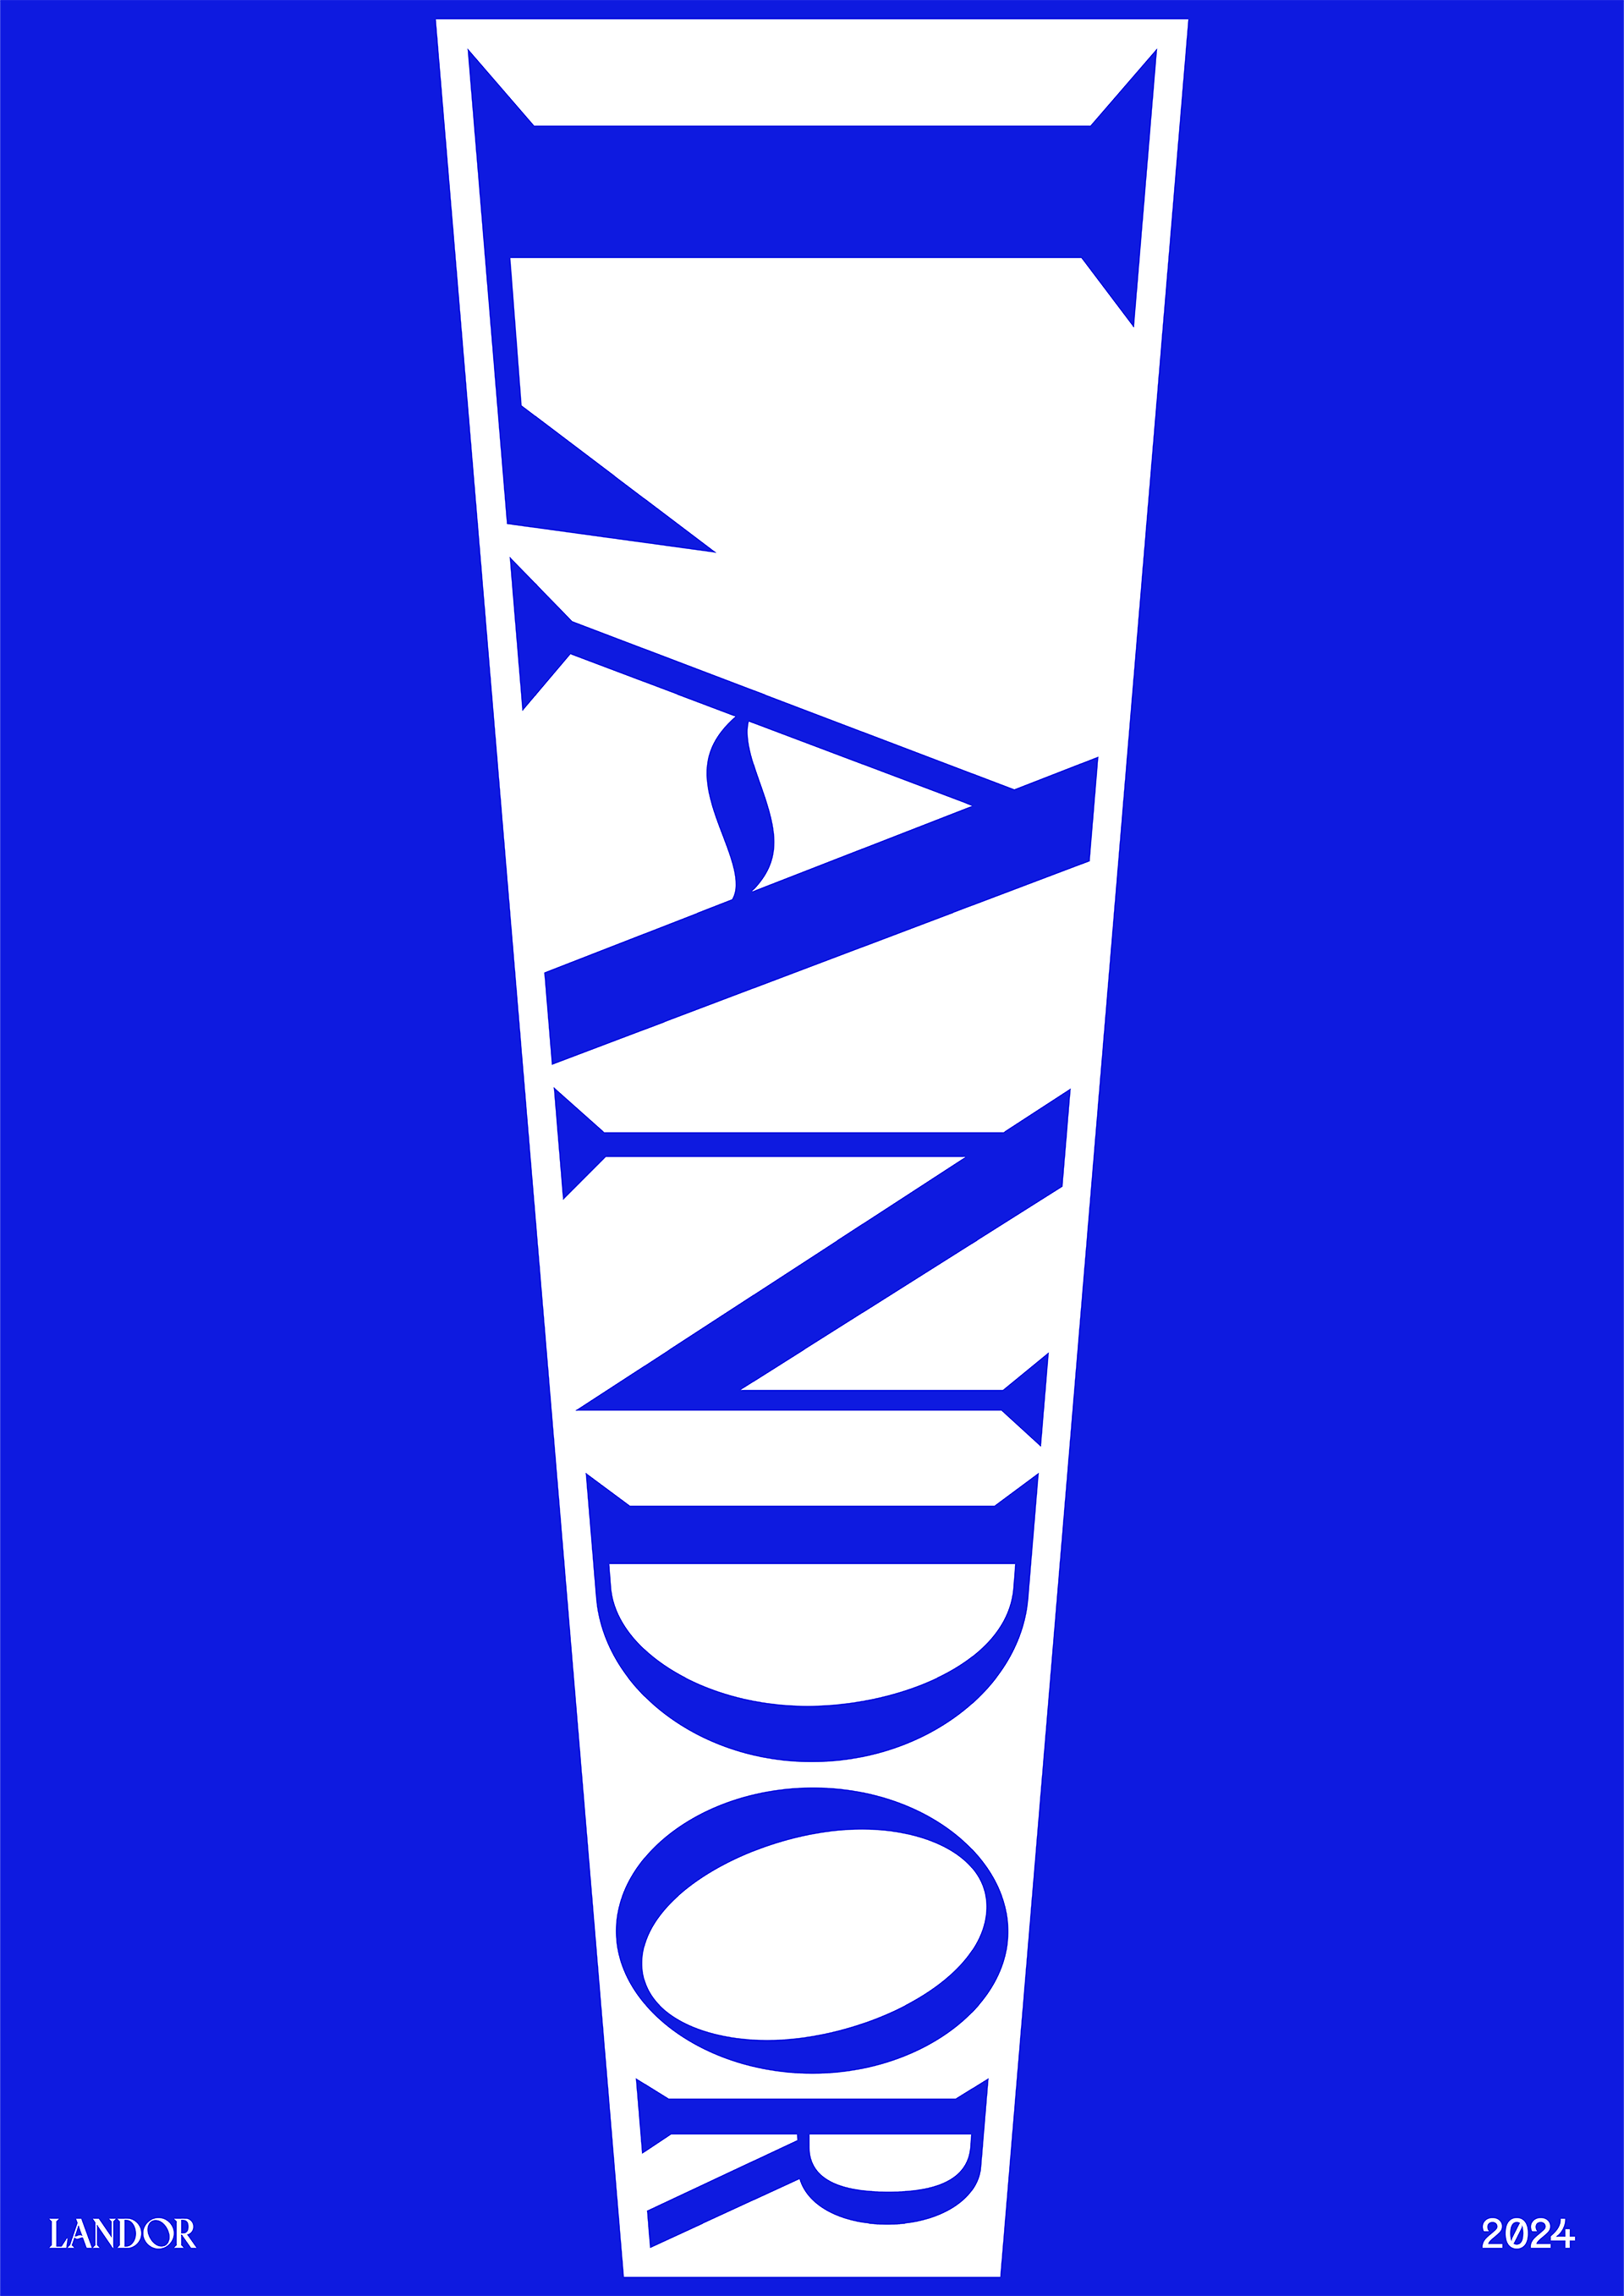 Landor Branding / Graphic Design